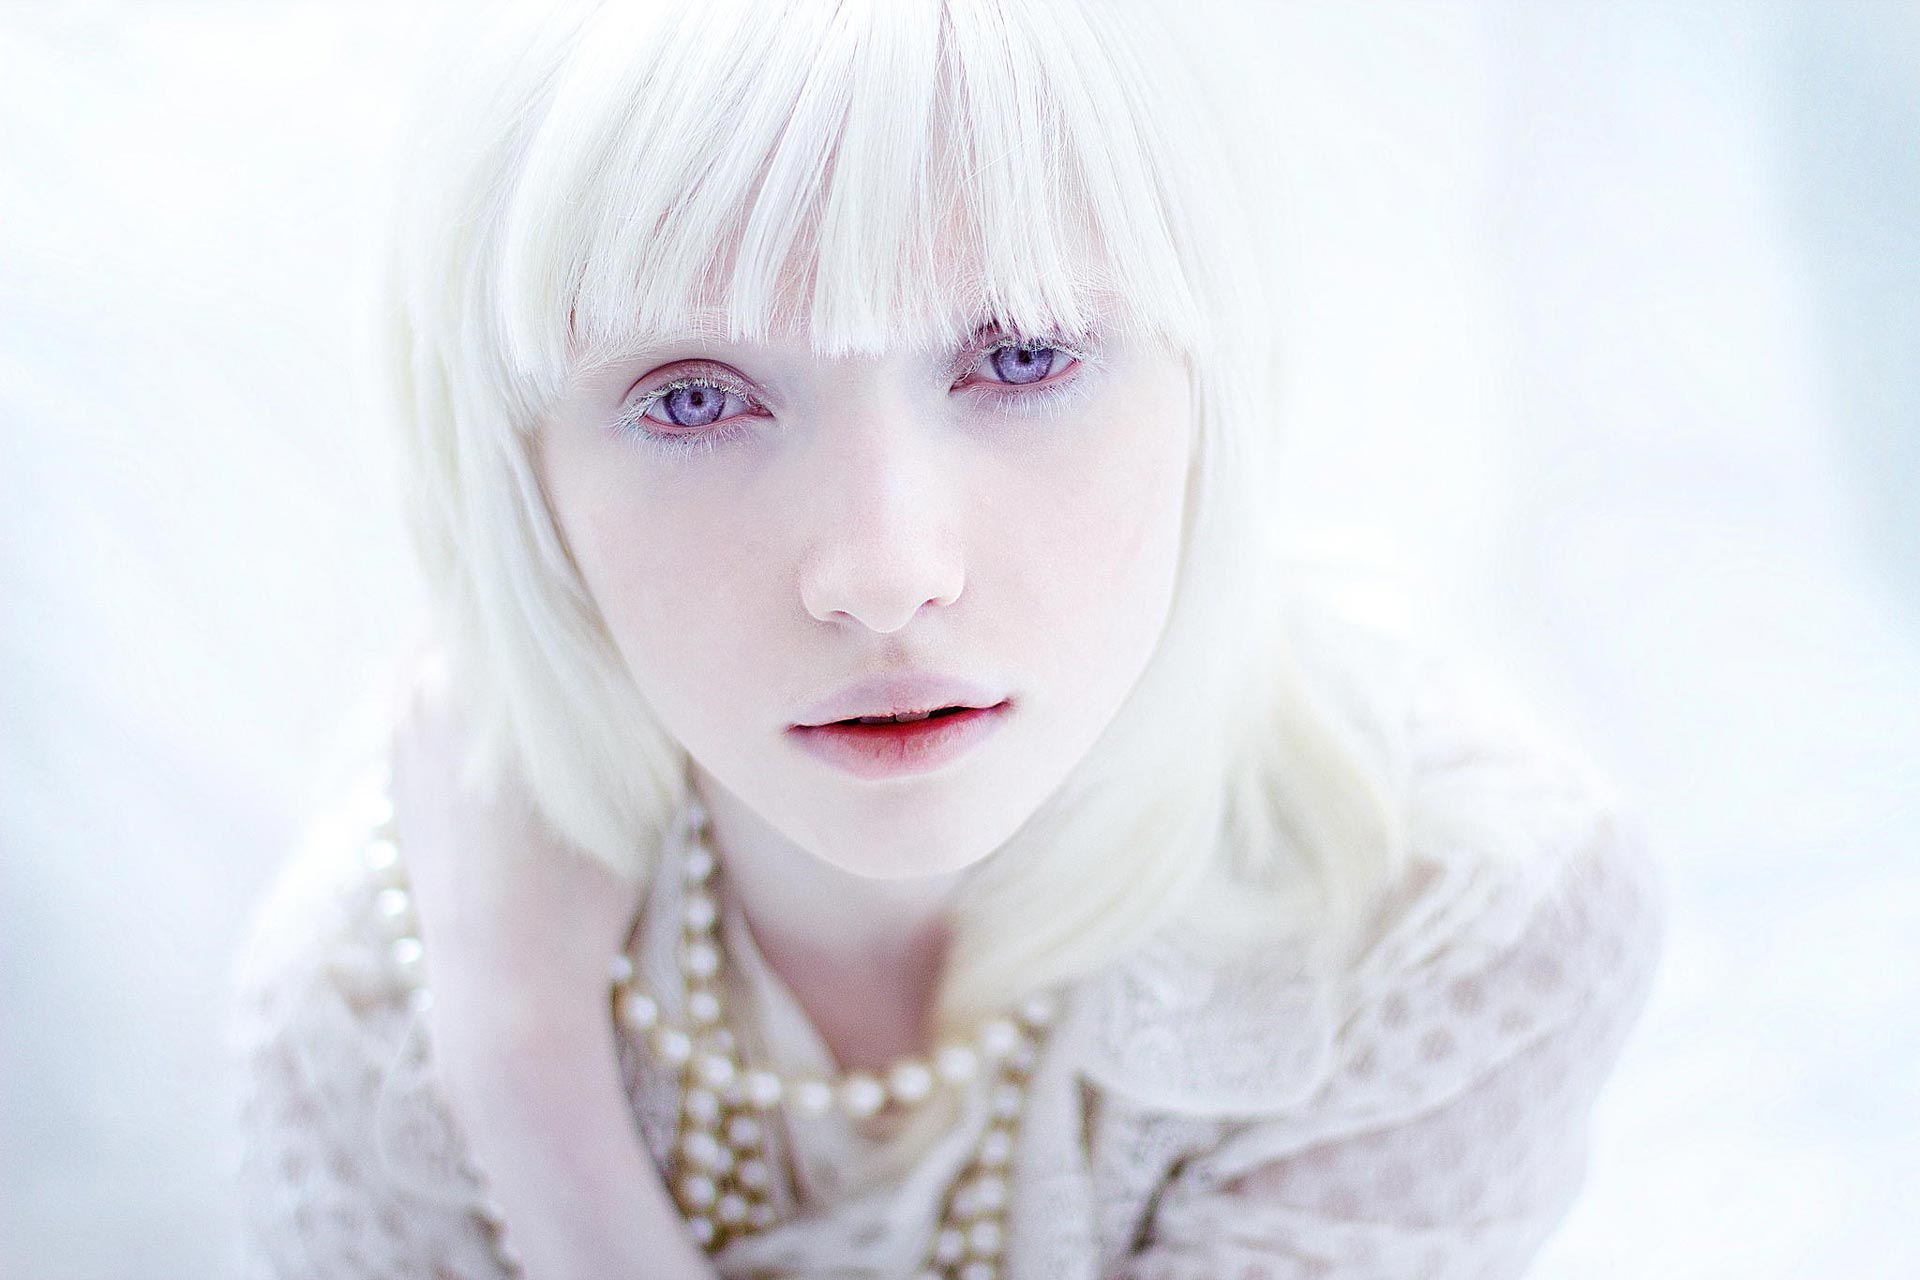 nastya-zhidkova-the-most-beautiful-albino-in-the-world-26